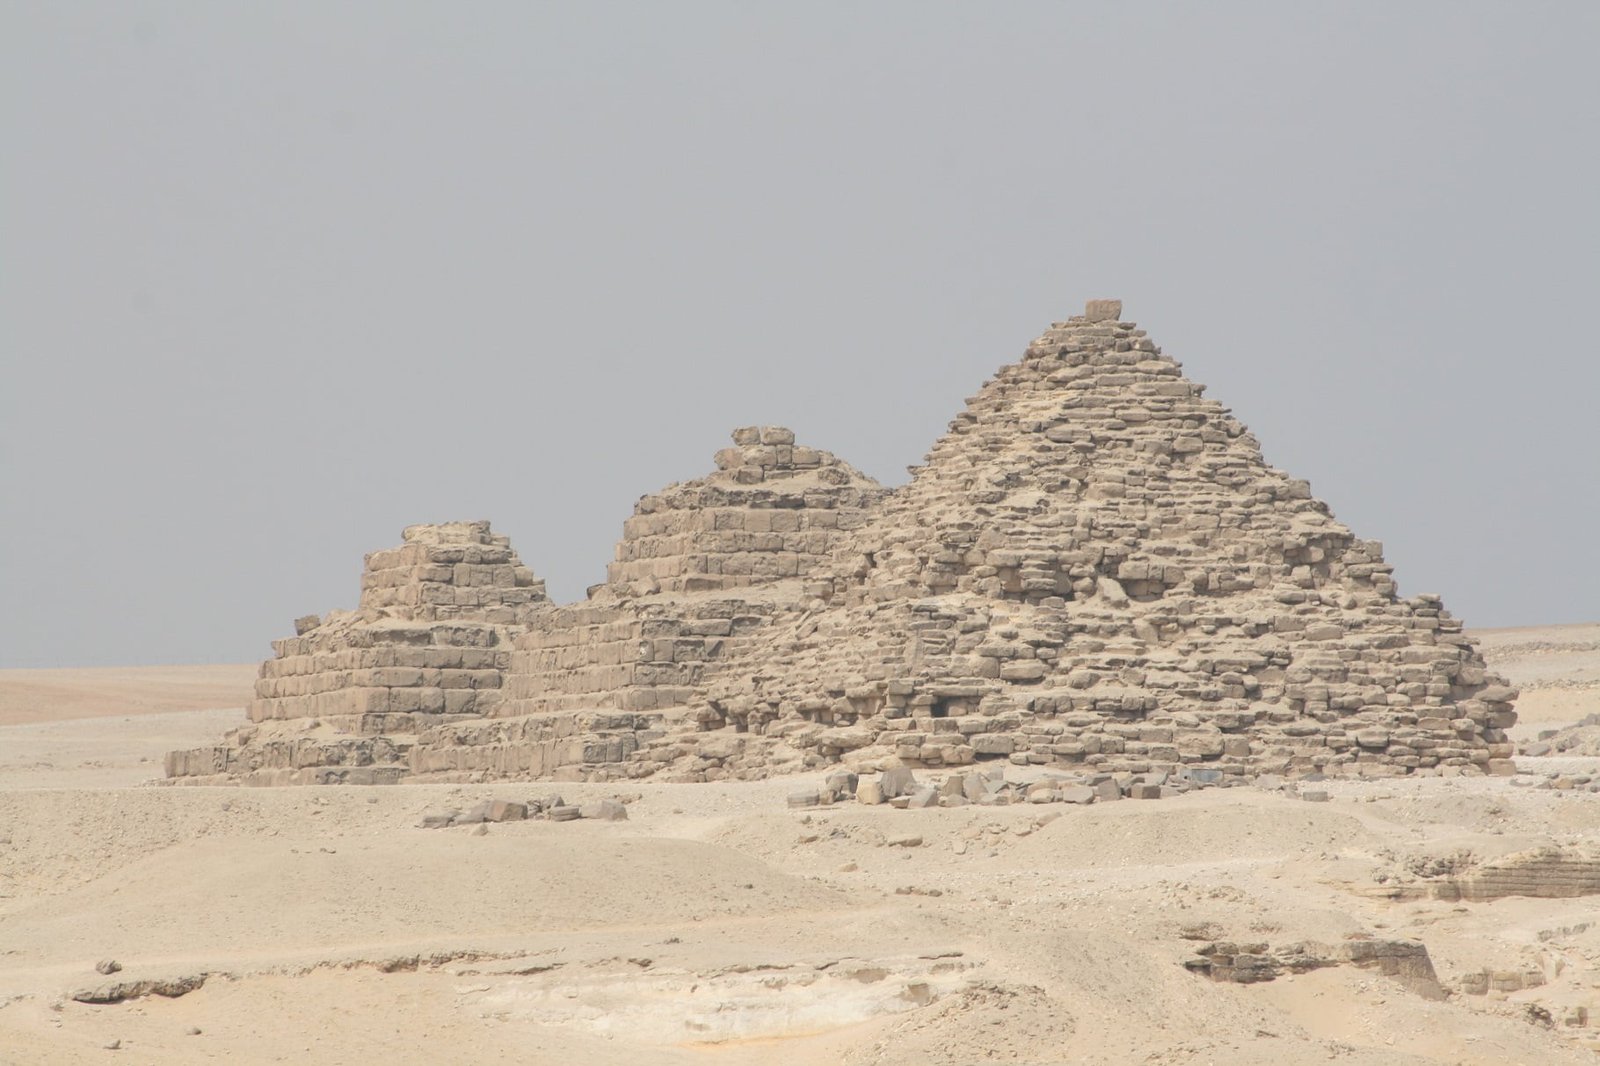 Queens' Pyramids in Giza